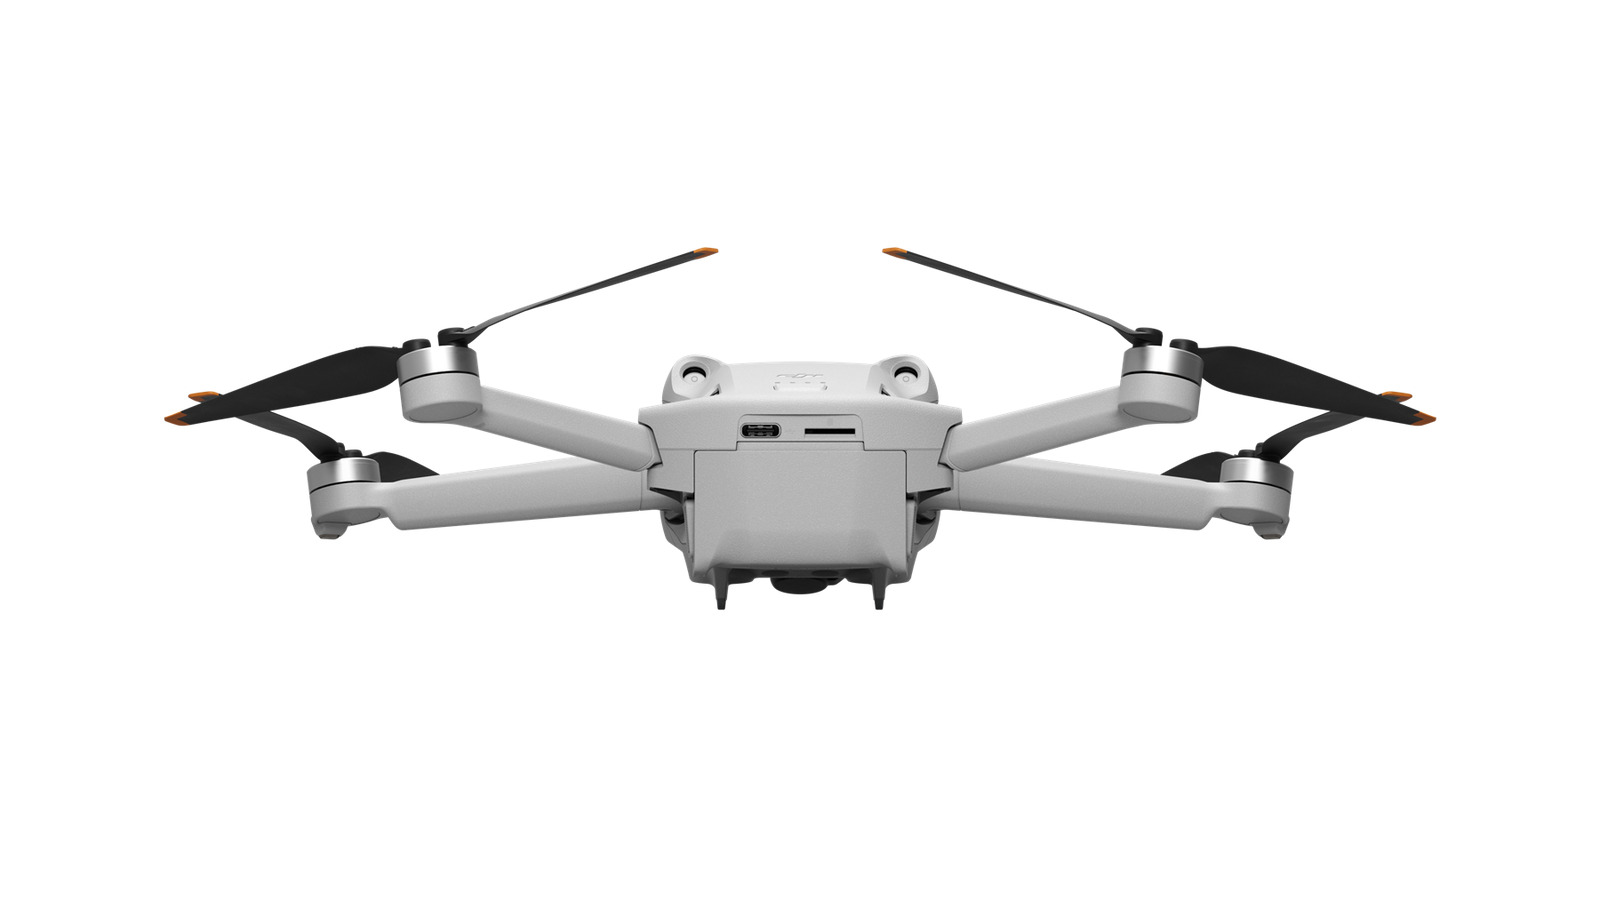 DJI Mini 3 Pro - 4K Camera Drone + Controller